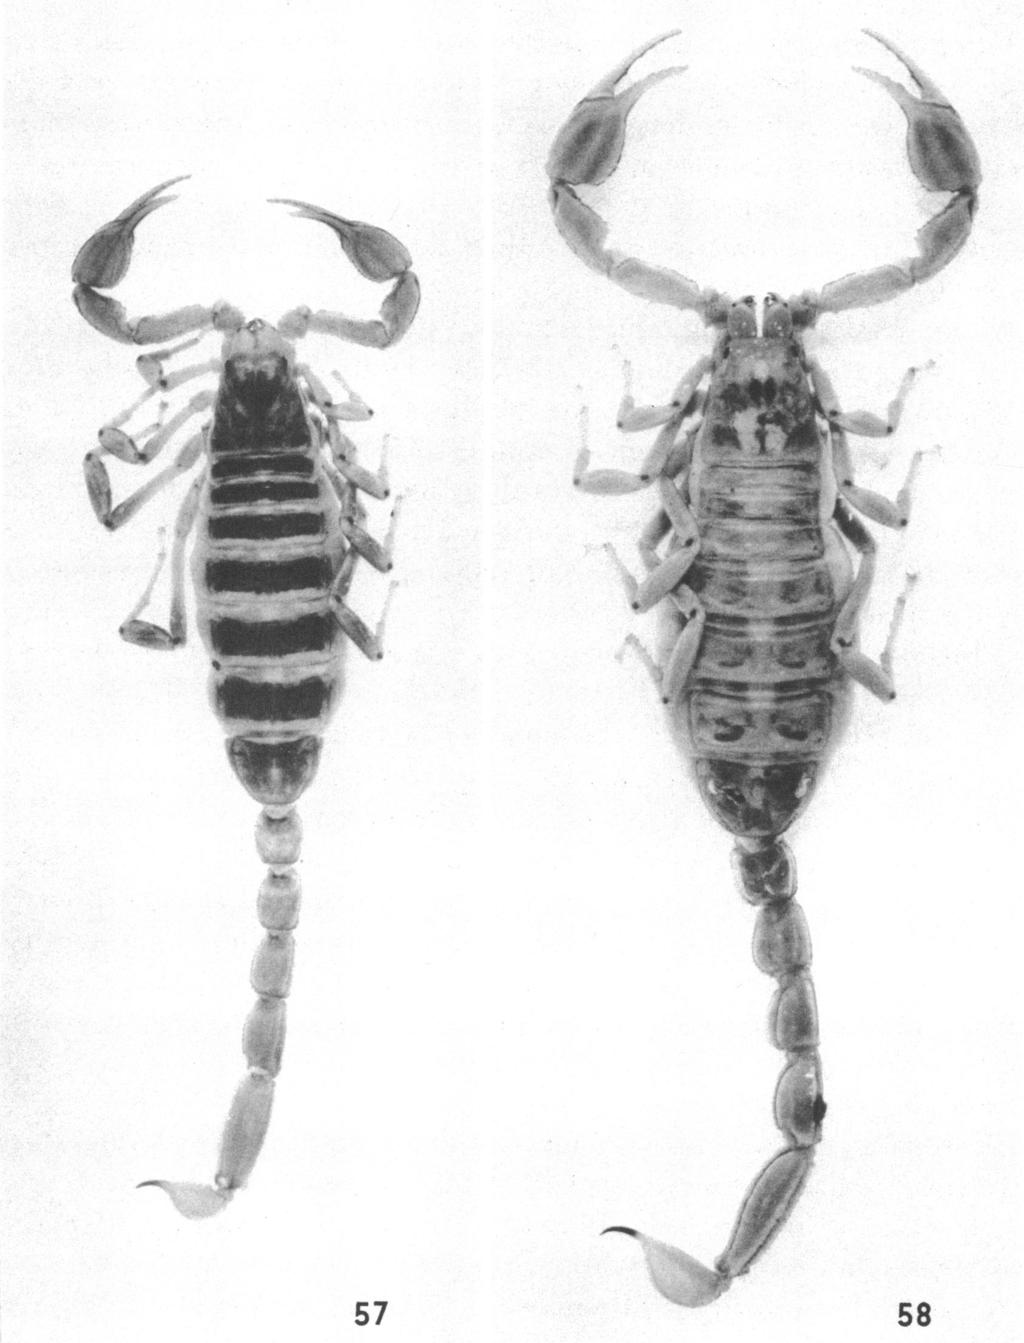 1966 GERTSCH AND SOLEGLAD: SCORPIONS 45 FIG. 57. Vejovis 2.~~~~~~~~~~~~~~~~#. Oregon. X FIG.57.Vejvisboreus (Girard), female from Oeo.X2 FIG. 58. Vejovis auratus, new species, female. X 2.